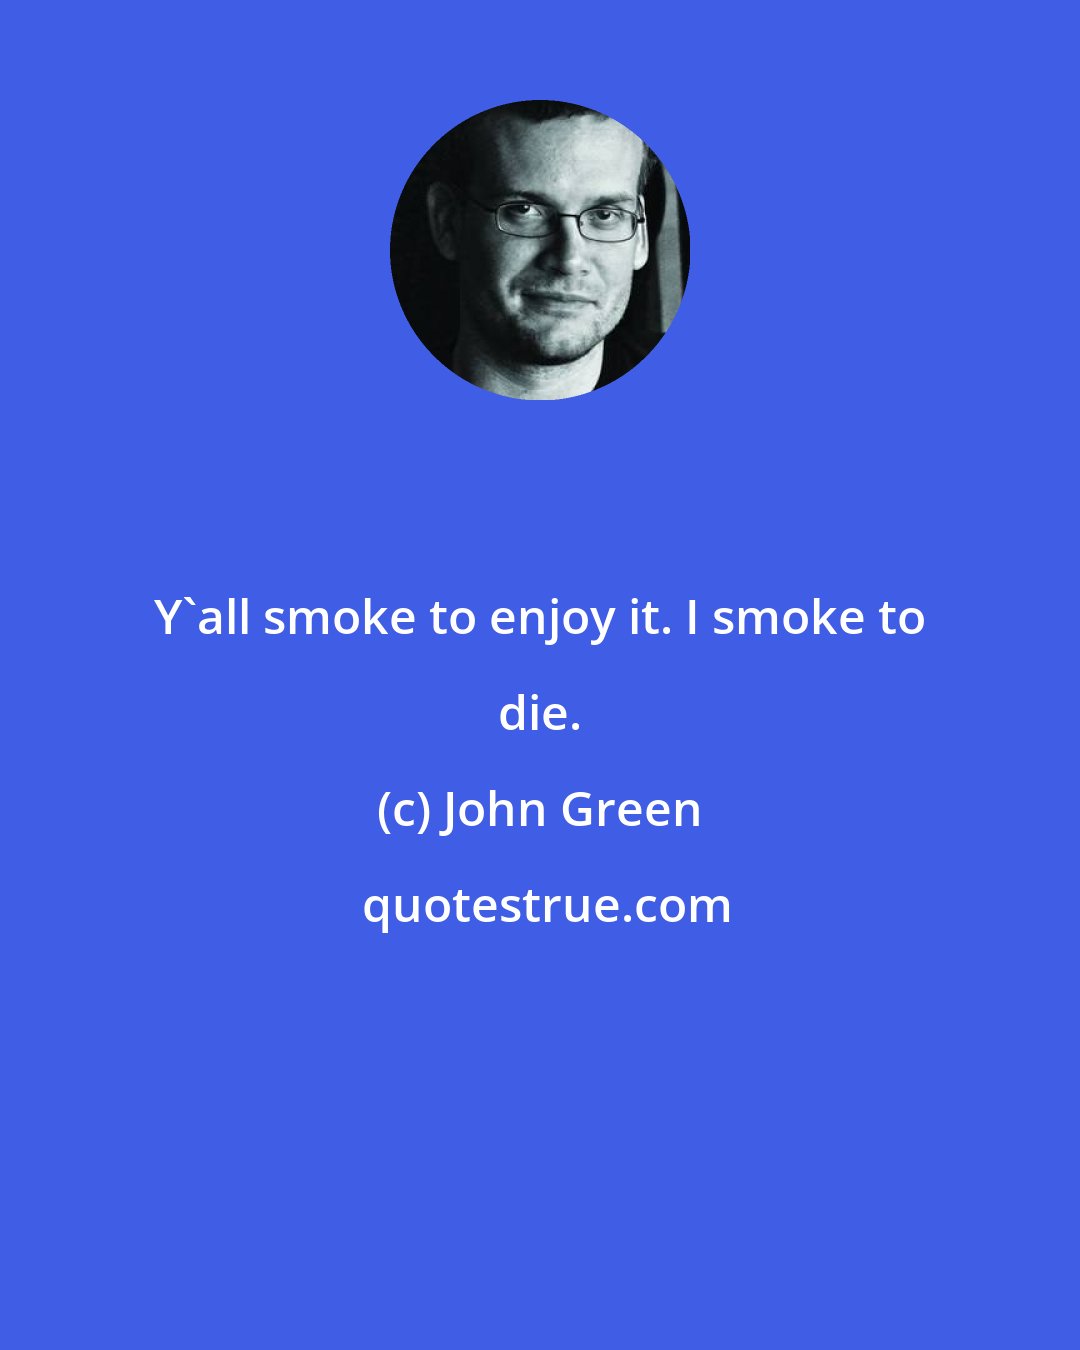 John Green: Y'all smoke to enjoy it. I smoke to die.